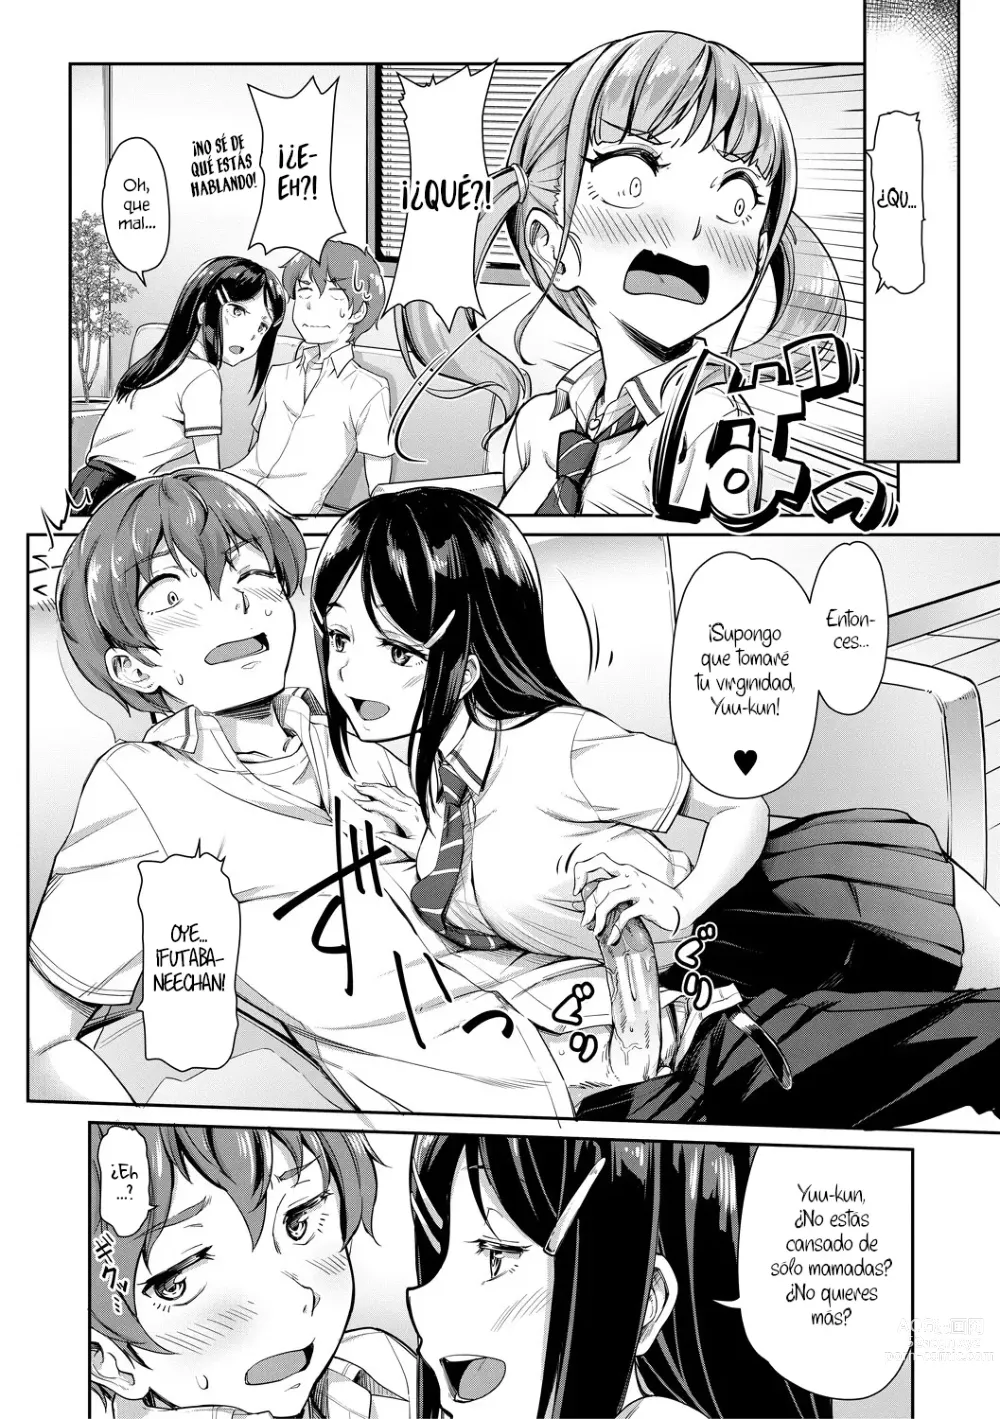 Page 9 of manga ¡Nee! ¡Nee! ¡Chantoshiyo!